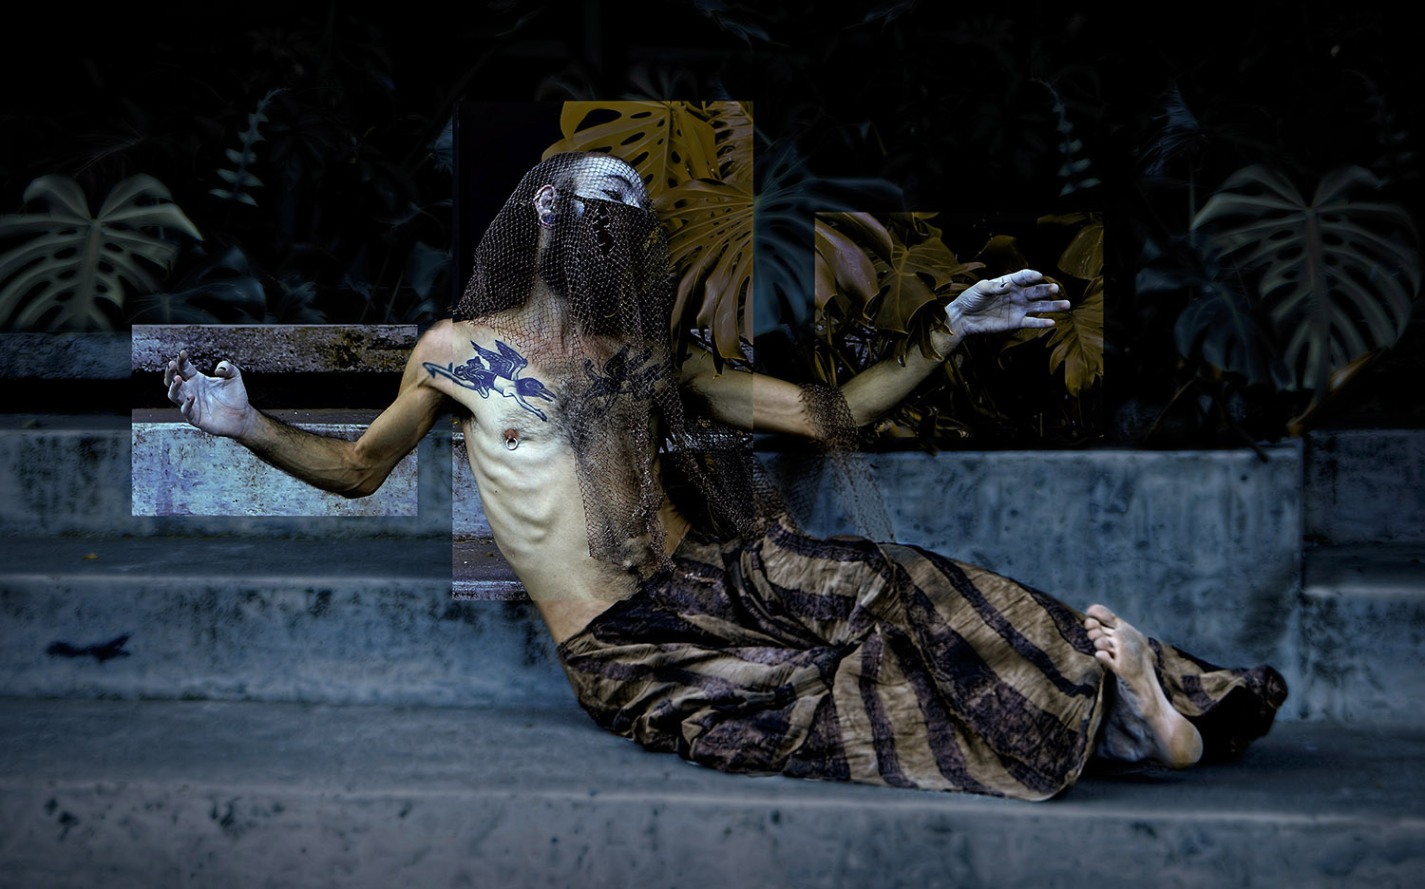 Migui Mandalasol-Butoh Performance Art-Mario Patino-Queer Photography-Arte de Accion-Mexico-9